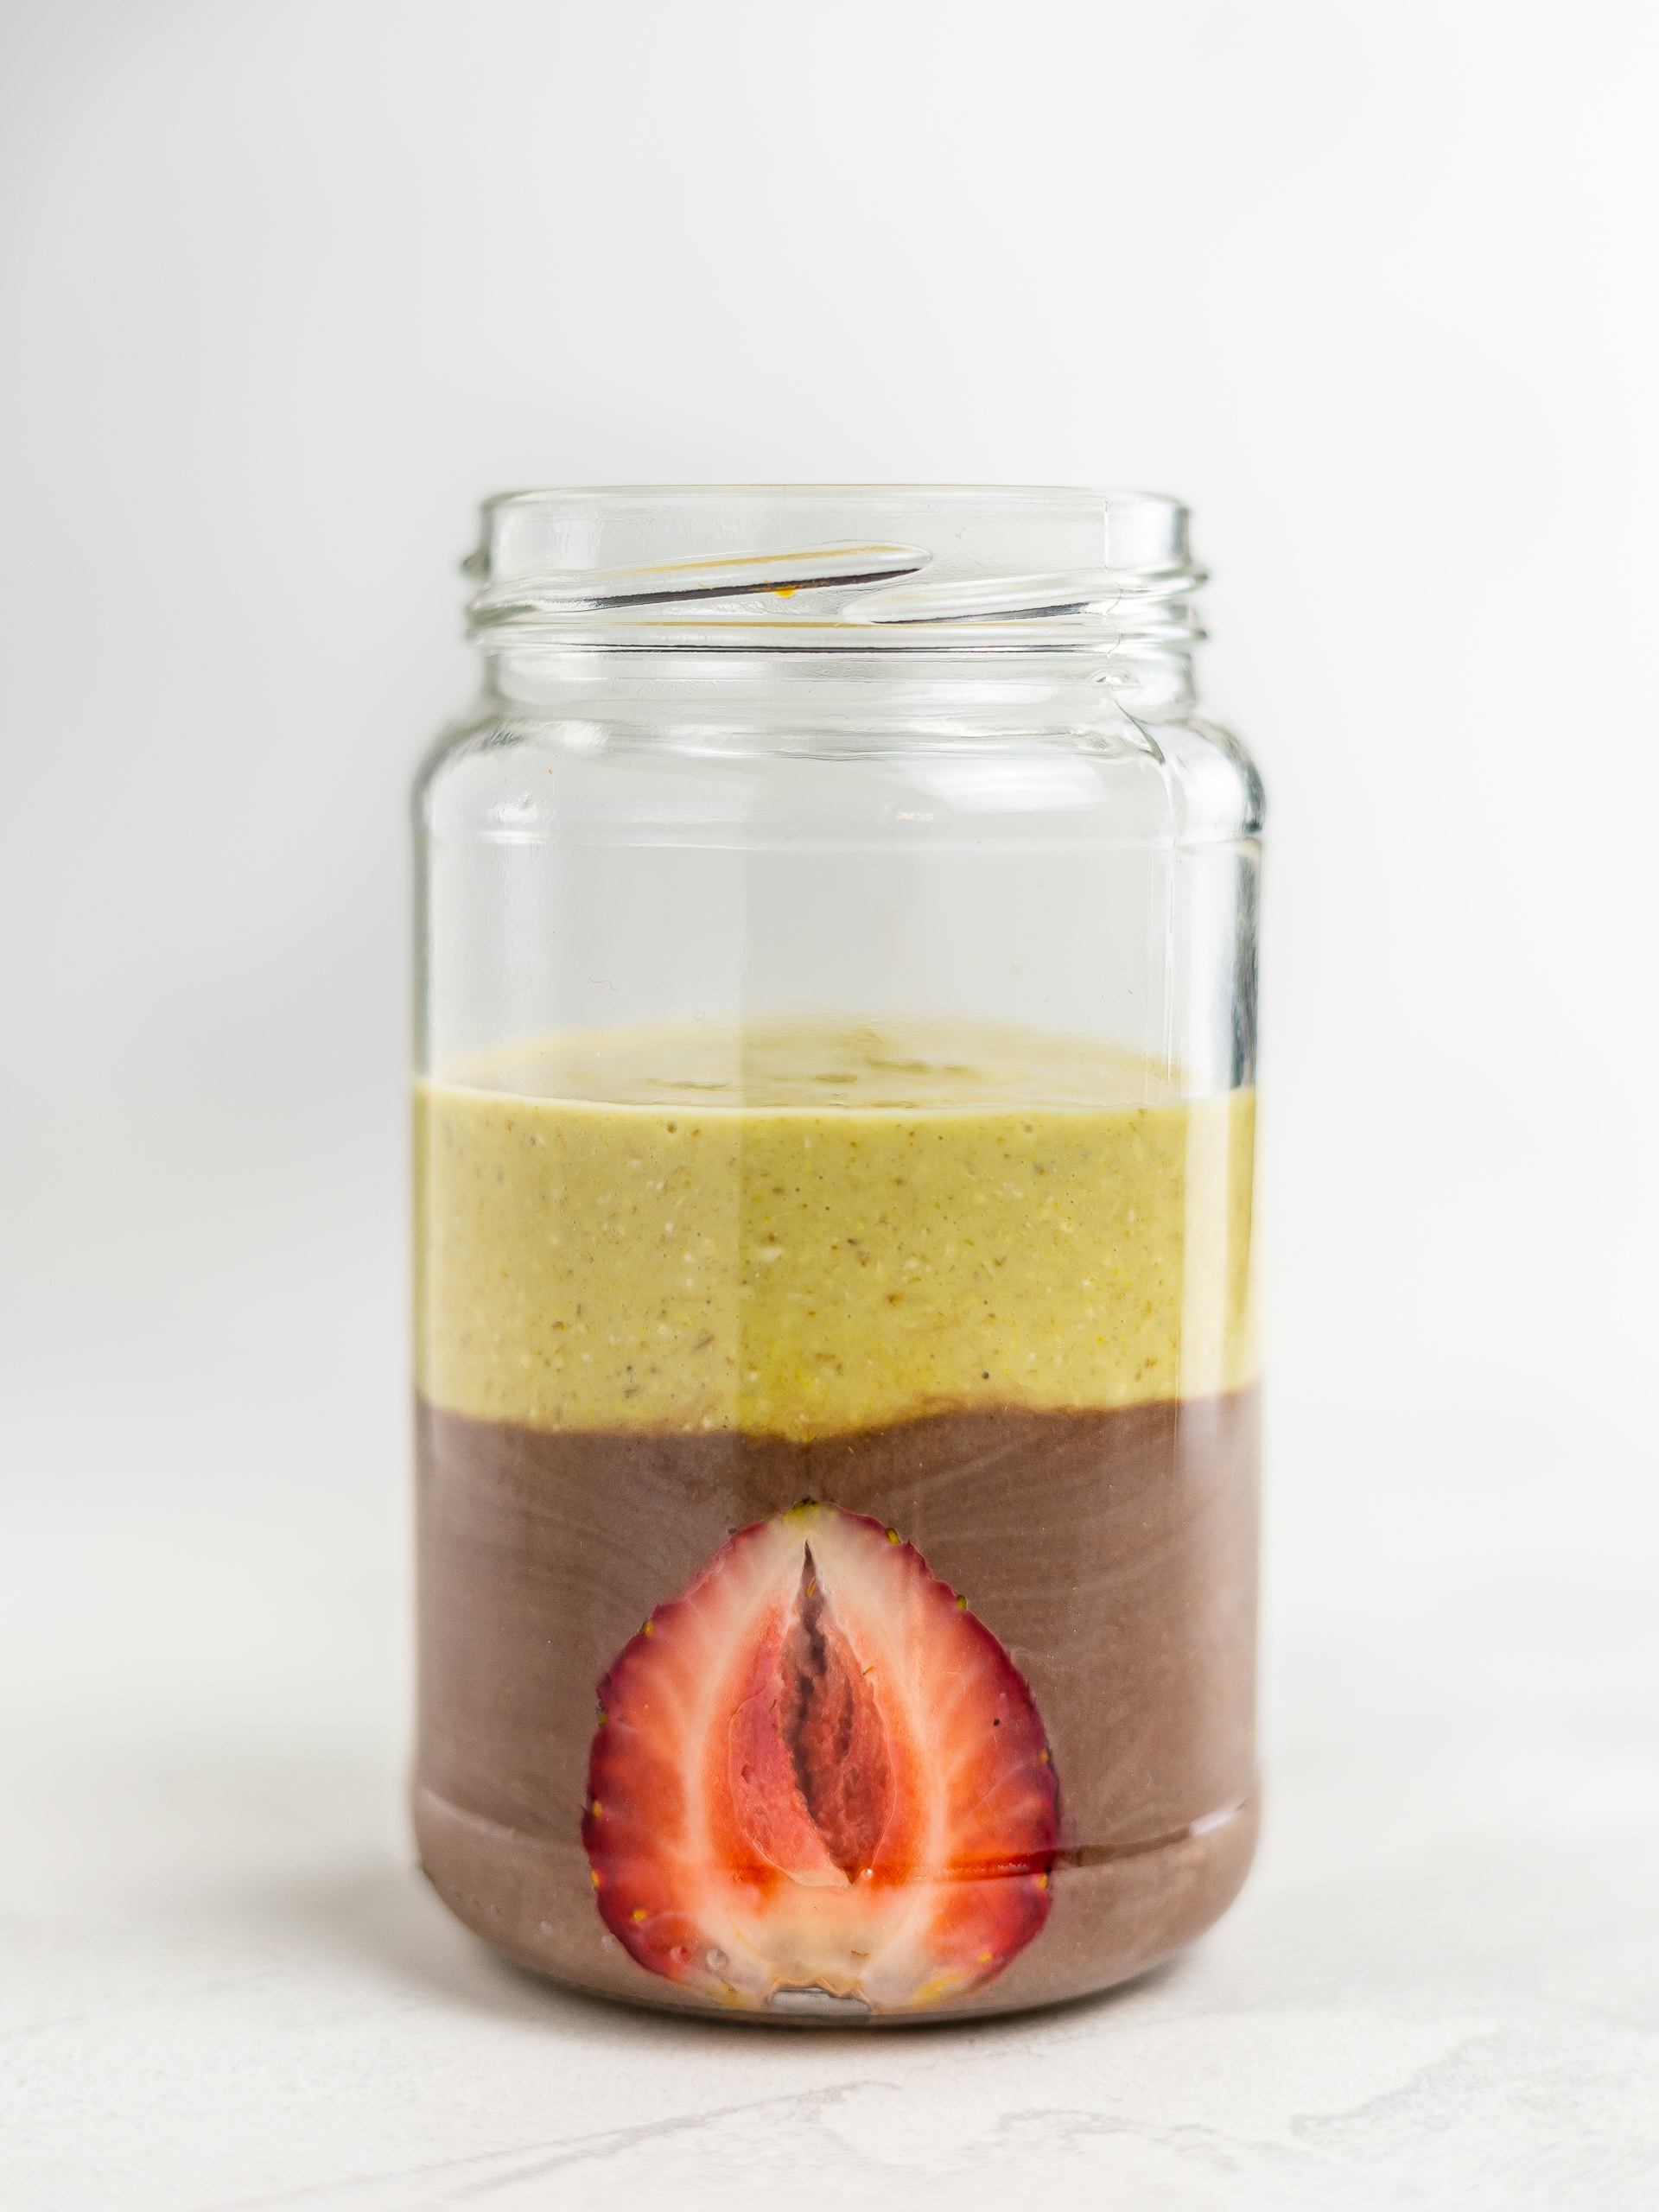 chocolate banana layered smoothie in a jar